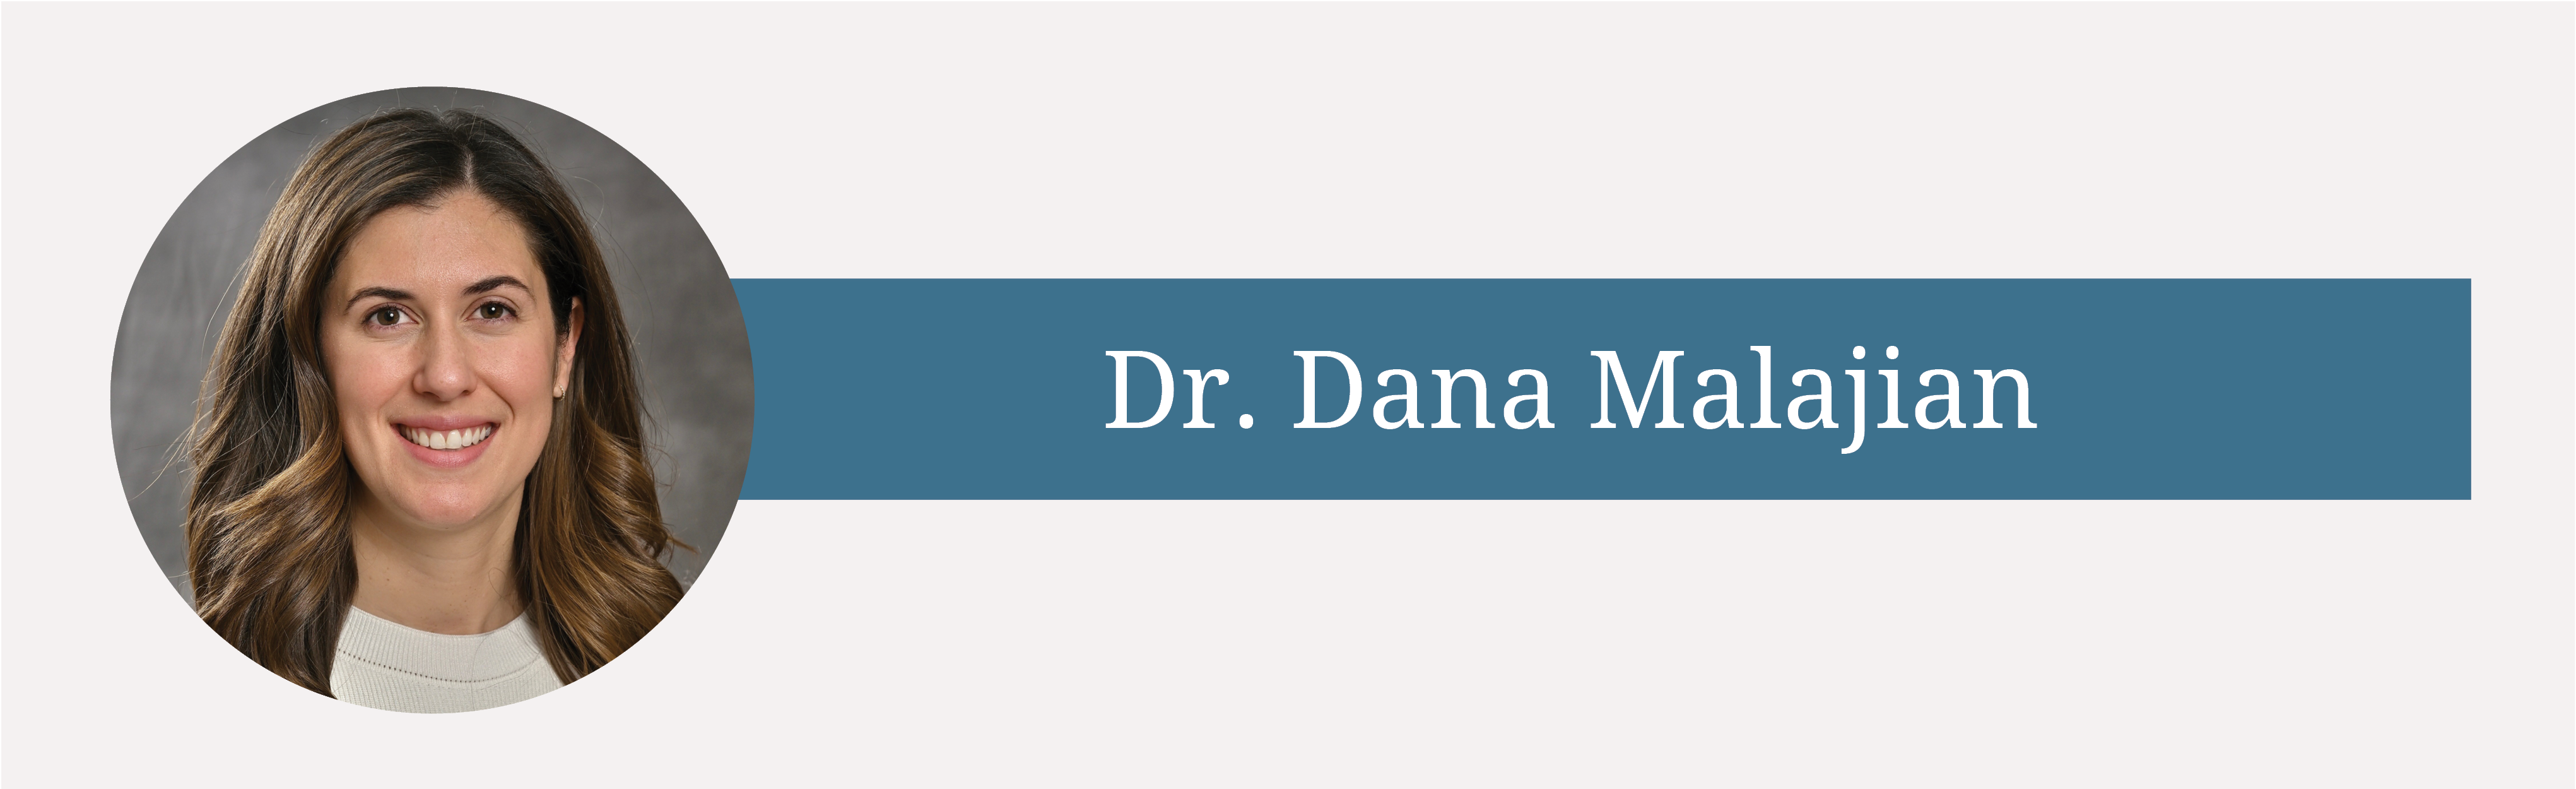 Scarsdale Medical Group Welcomes Dermatologist Dr. Dana Malajian